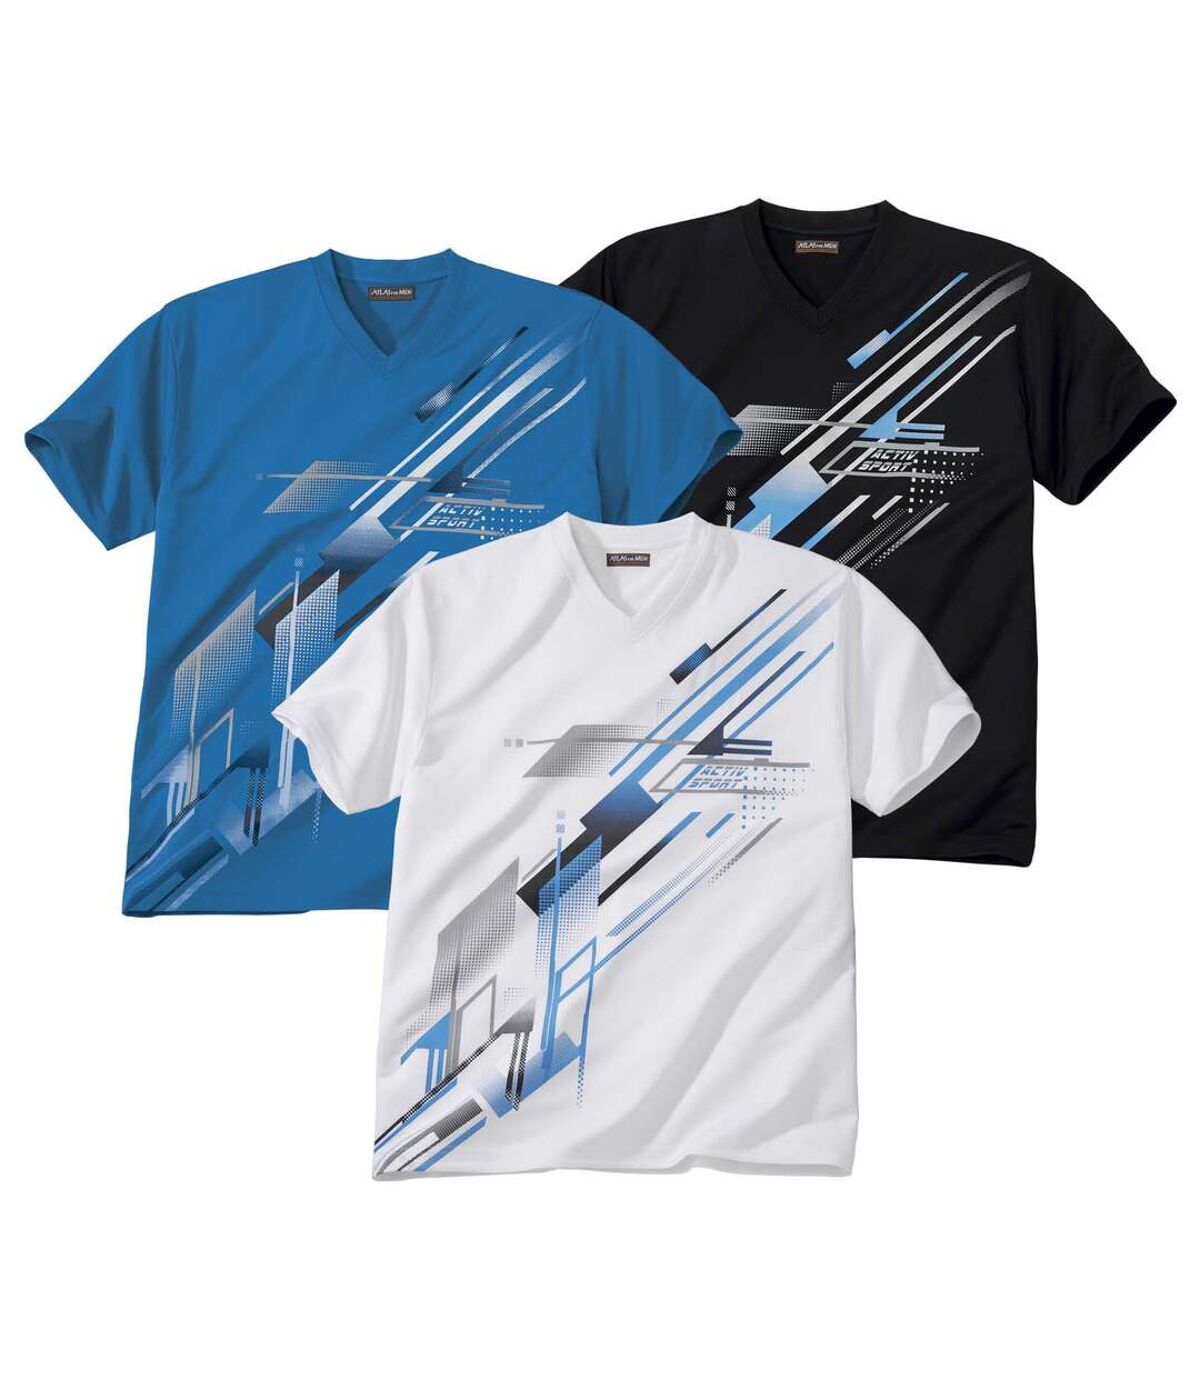 Pack of 3 Men's Sports Graphic Print T-Shirts - White Black Blue Atlas For Men